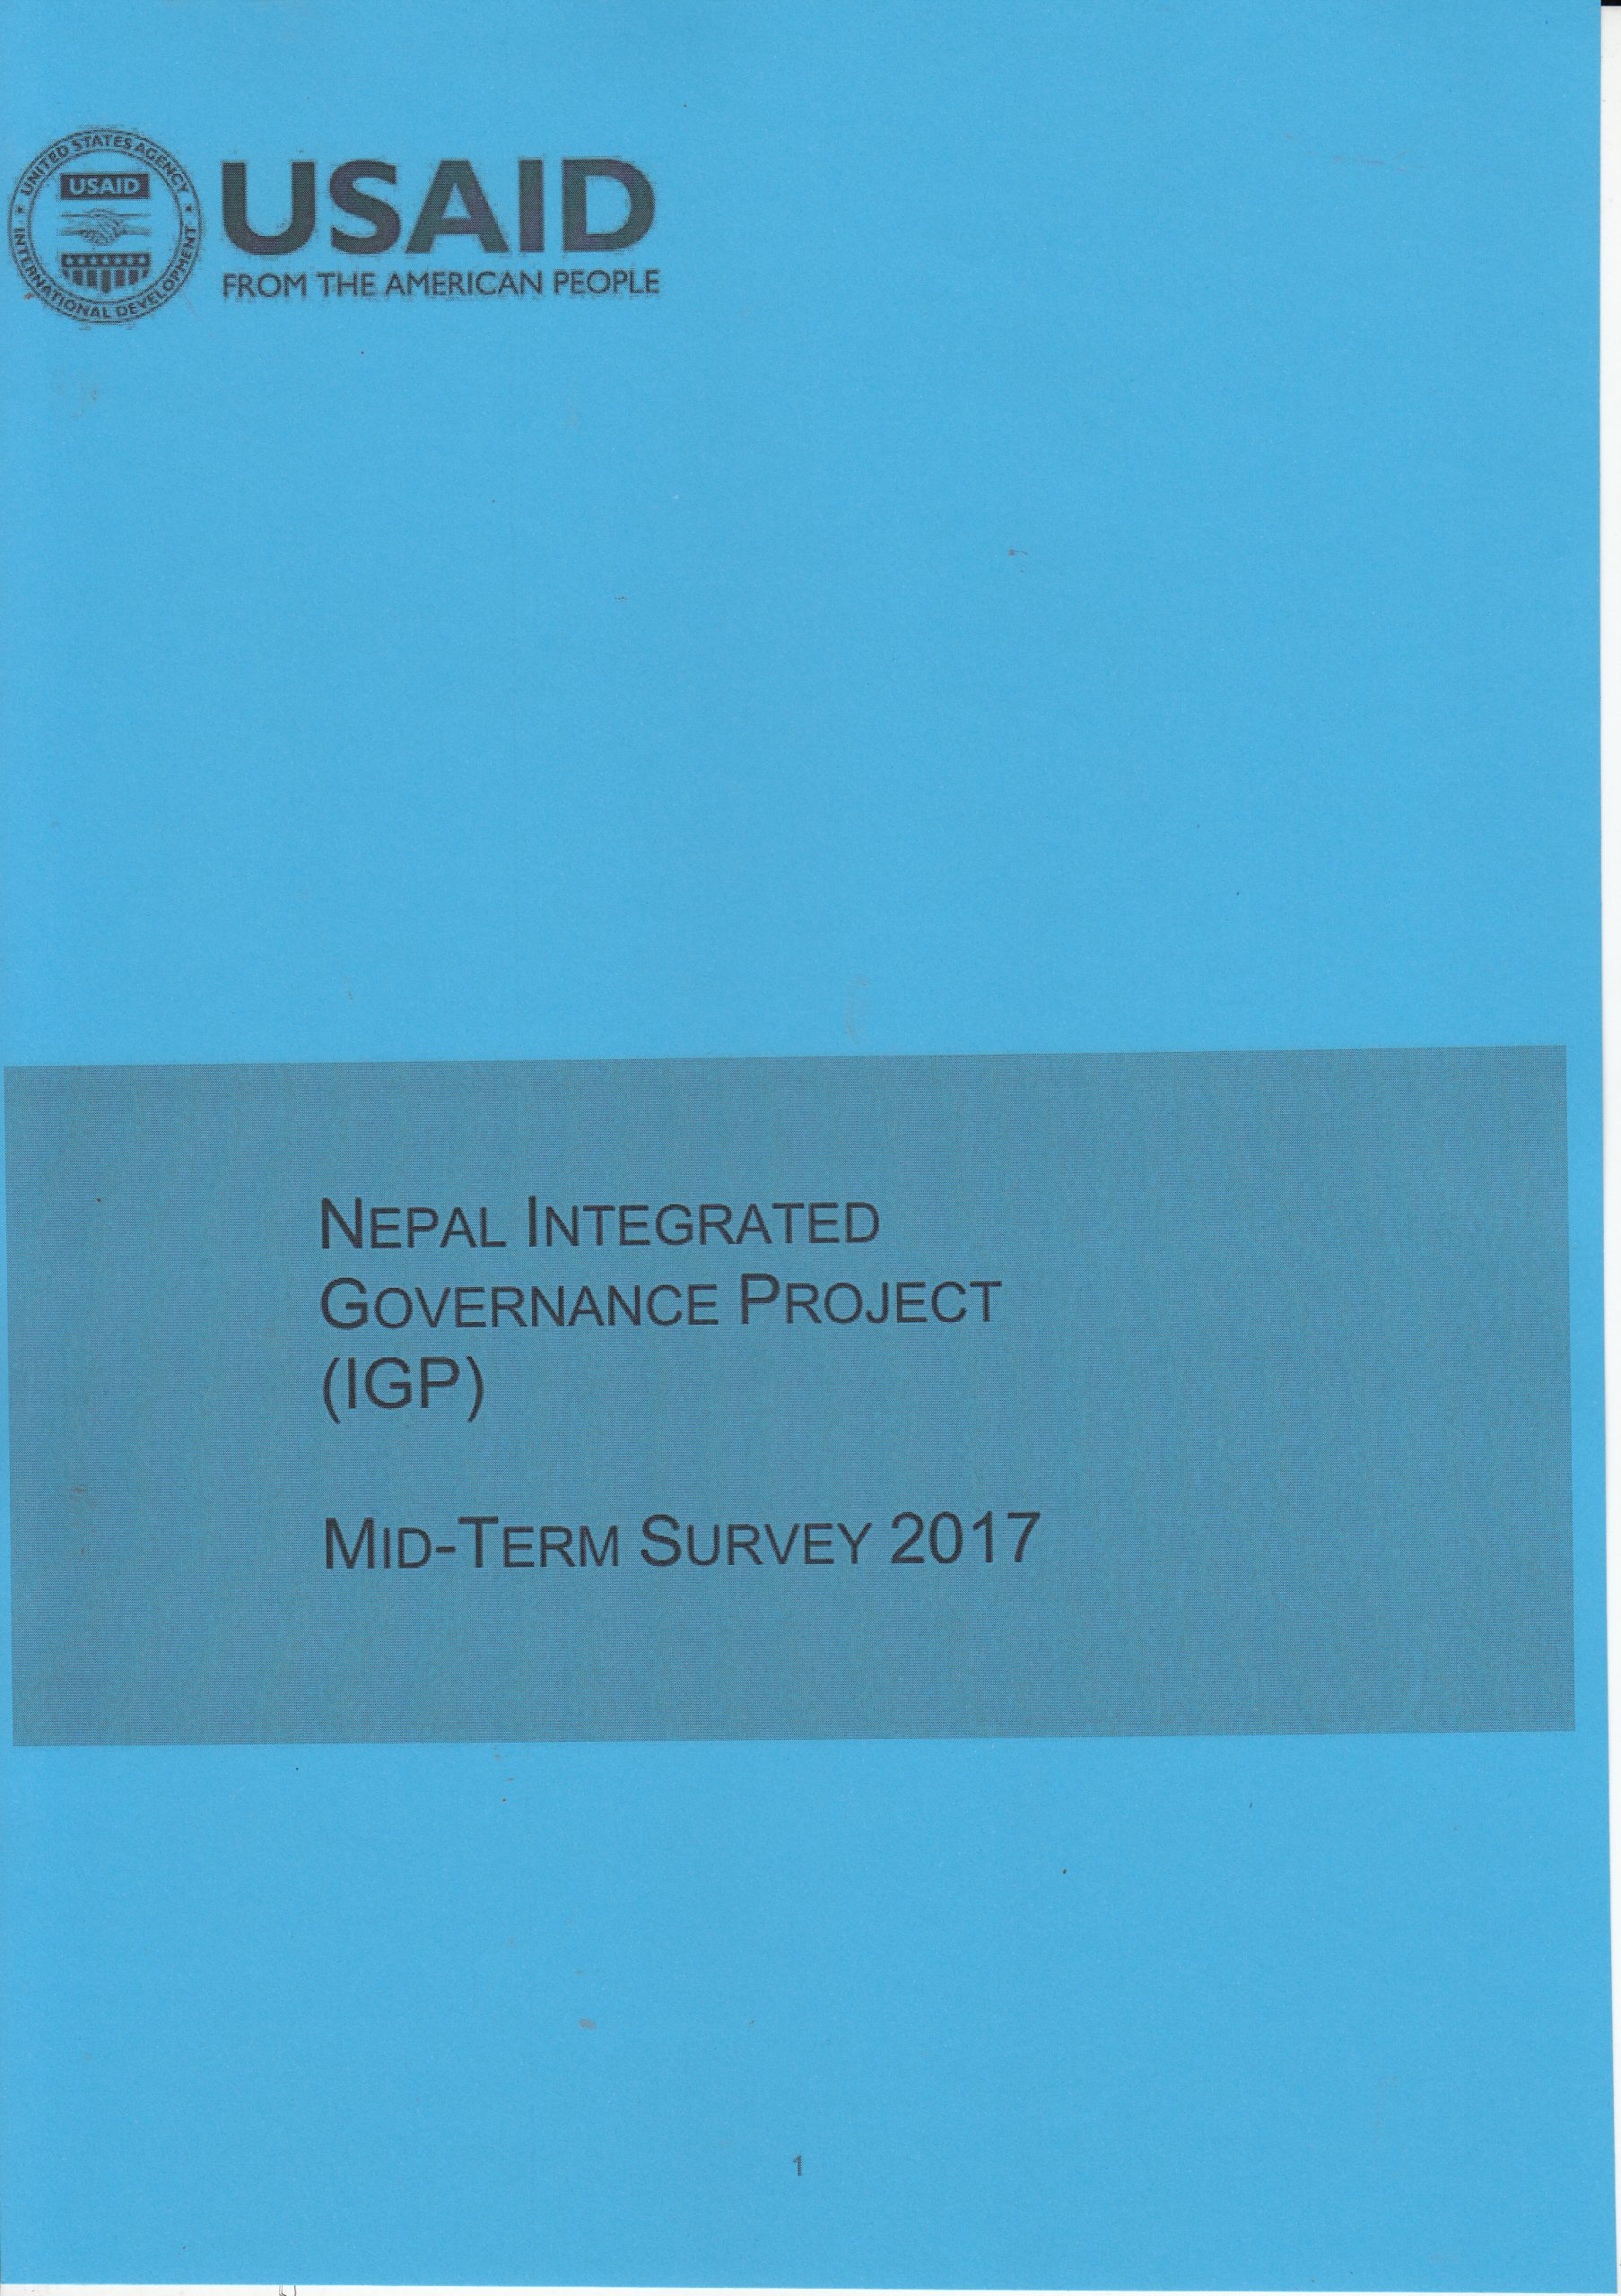 Nepal Knowledge Attitude and Practice (KAP) Survey – Baseline Analysis Report 2018